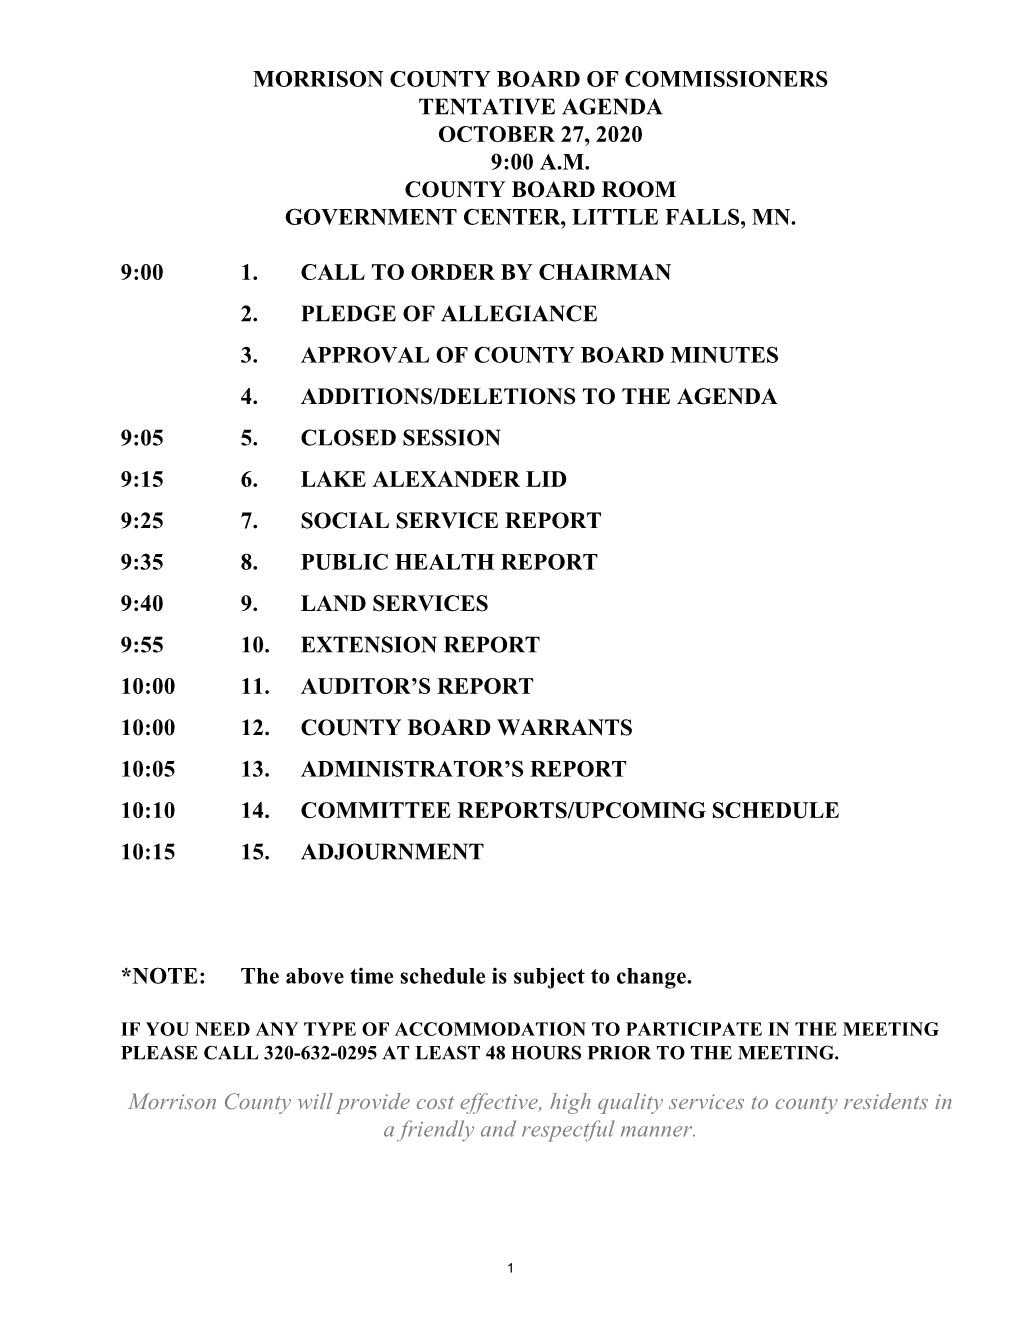 Morrison County Board of Commissioners Tentative Agenda October 27, 2020 9:00 A.M